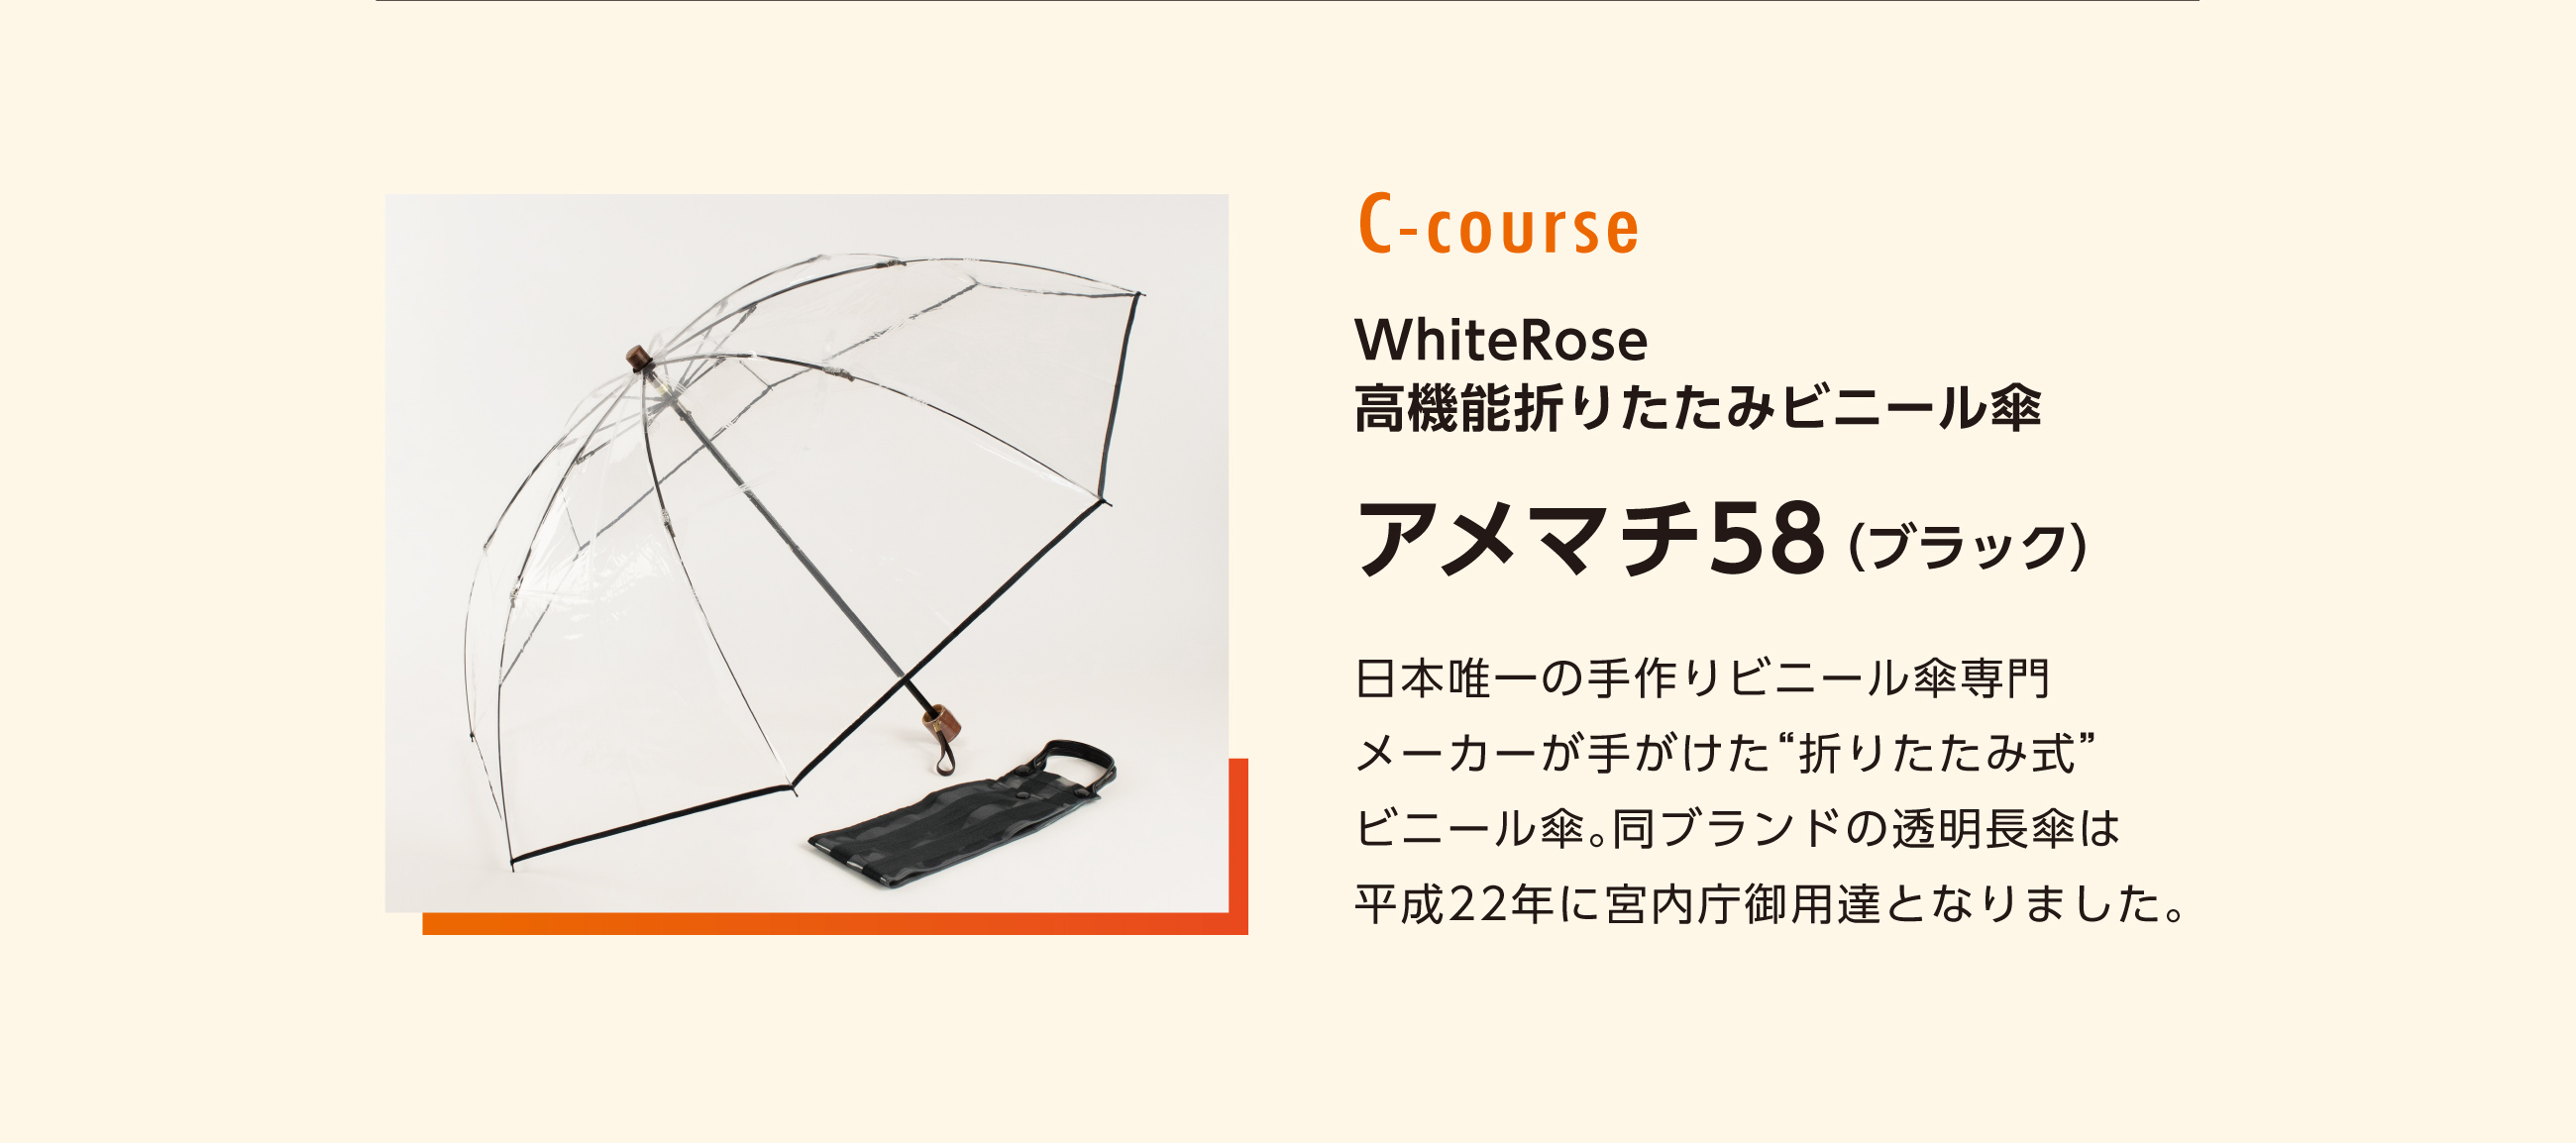 C-course　WhiteRose 高機能折りたたみビニール傘　アメマチ58 （ブラック）　日本唯一の手作りビニール傘専門メーカーが手がけた“折りたたみ式”ビニール傘。同ブランドの透明長傘は平成22年に宮内庁御用達となりました。